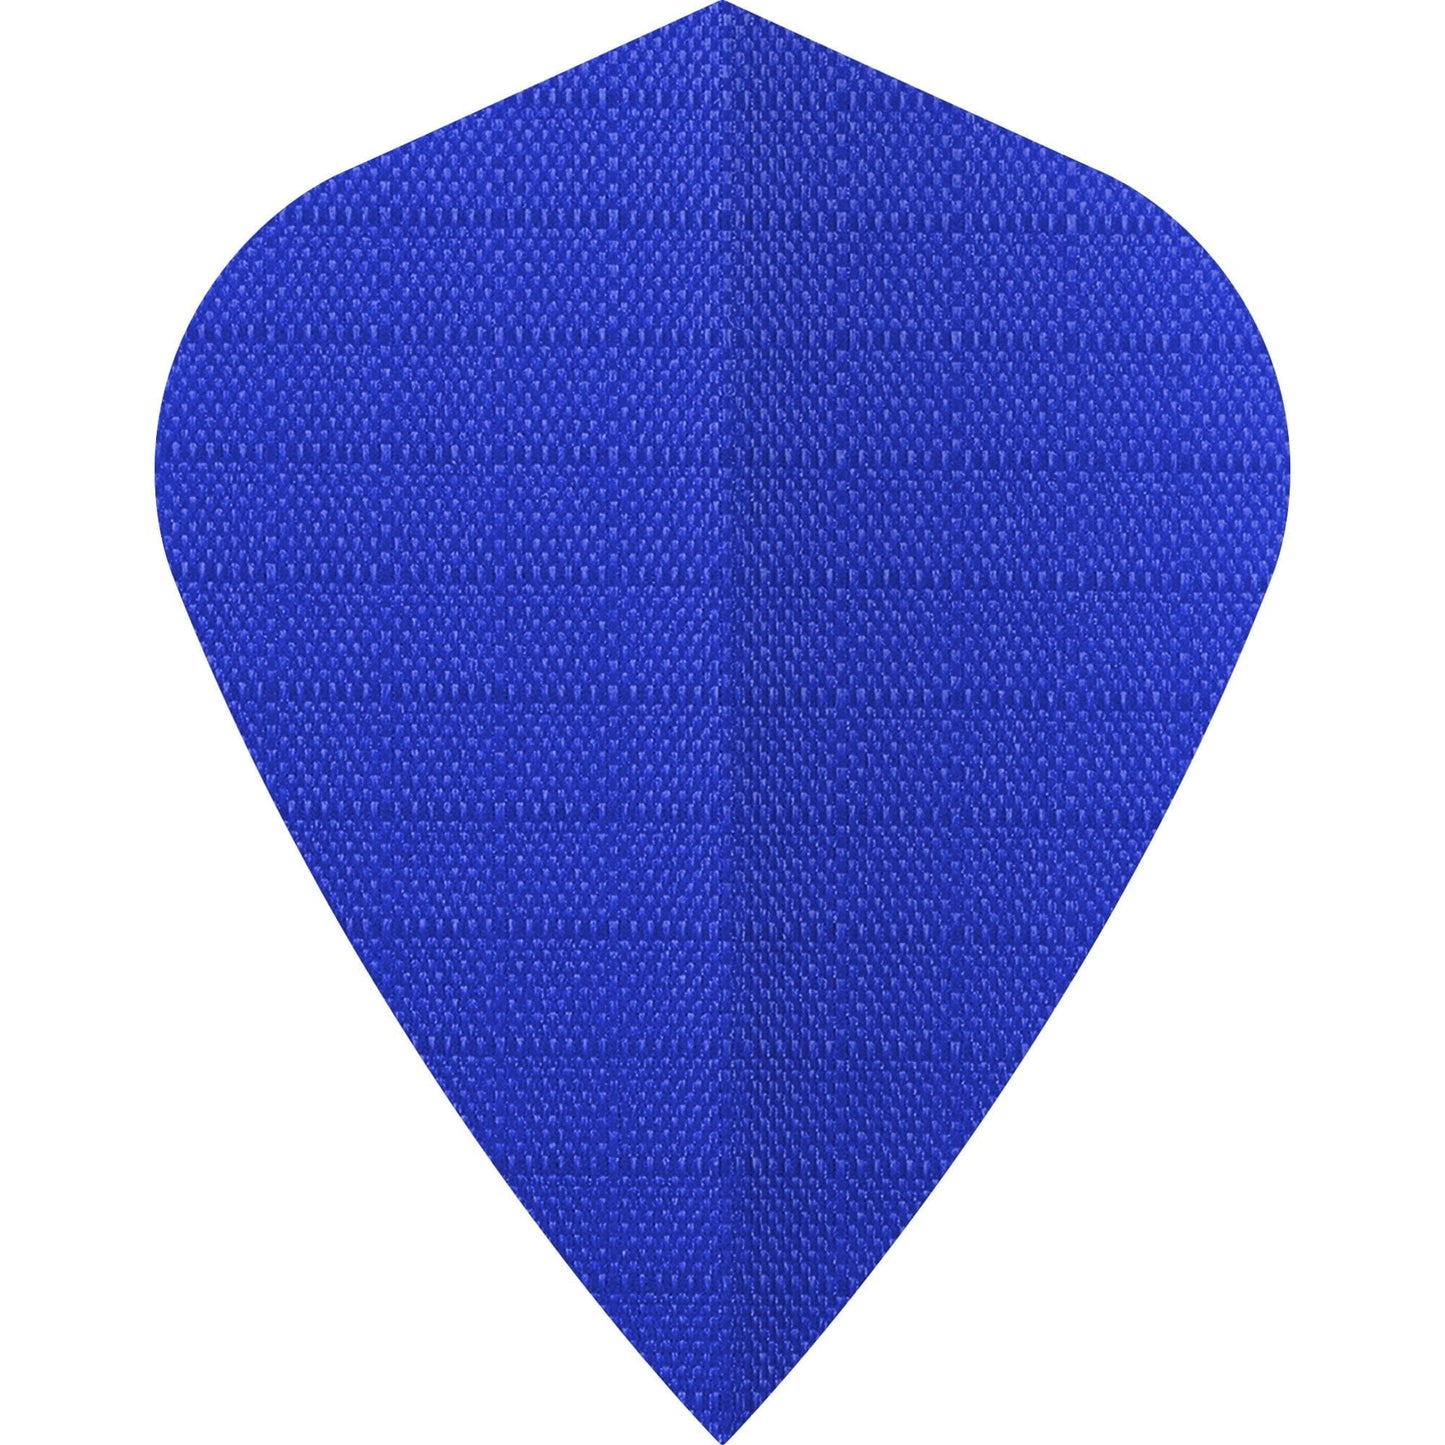 *Designa Dart Flights - Fabric Rip Stop Nylon - Longlife - Kite Blue